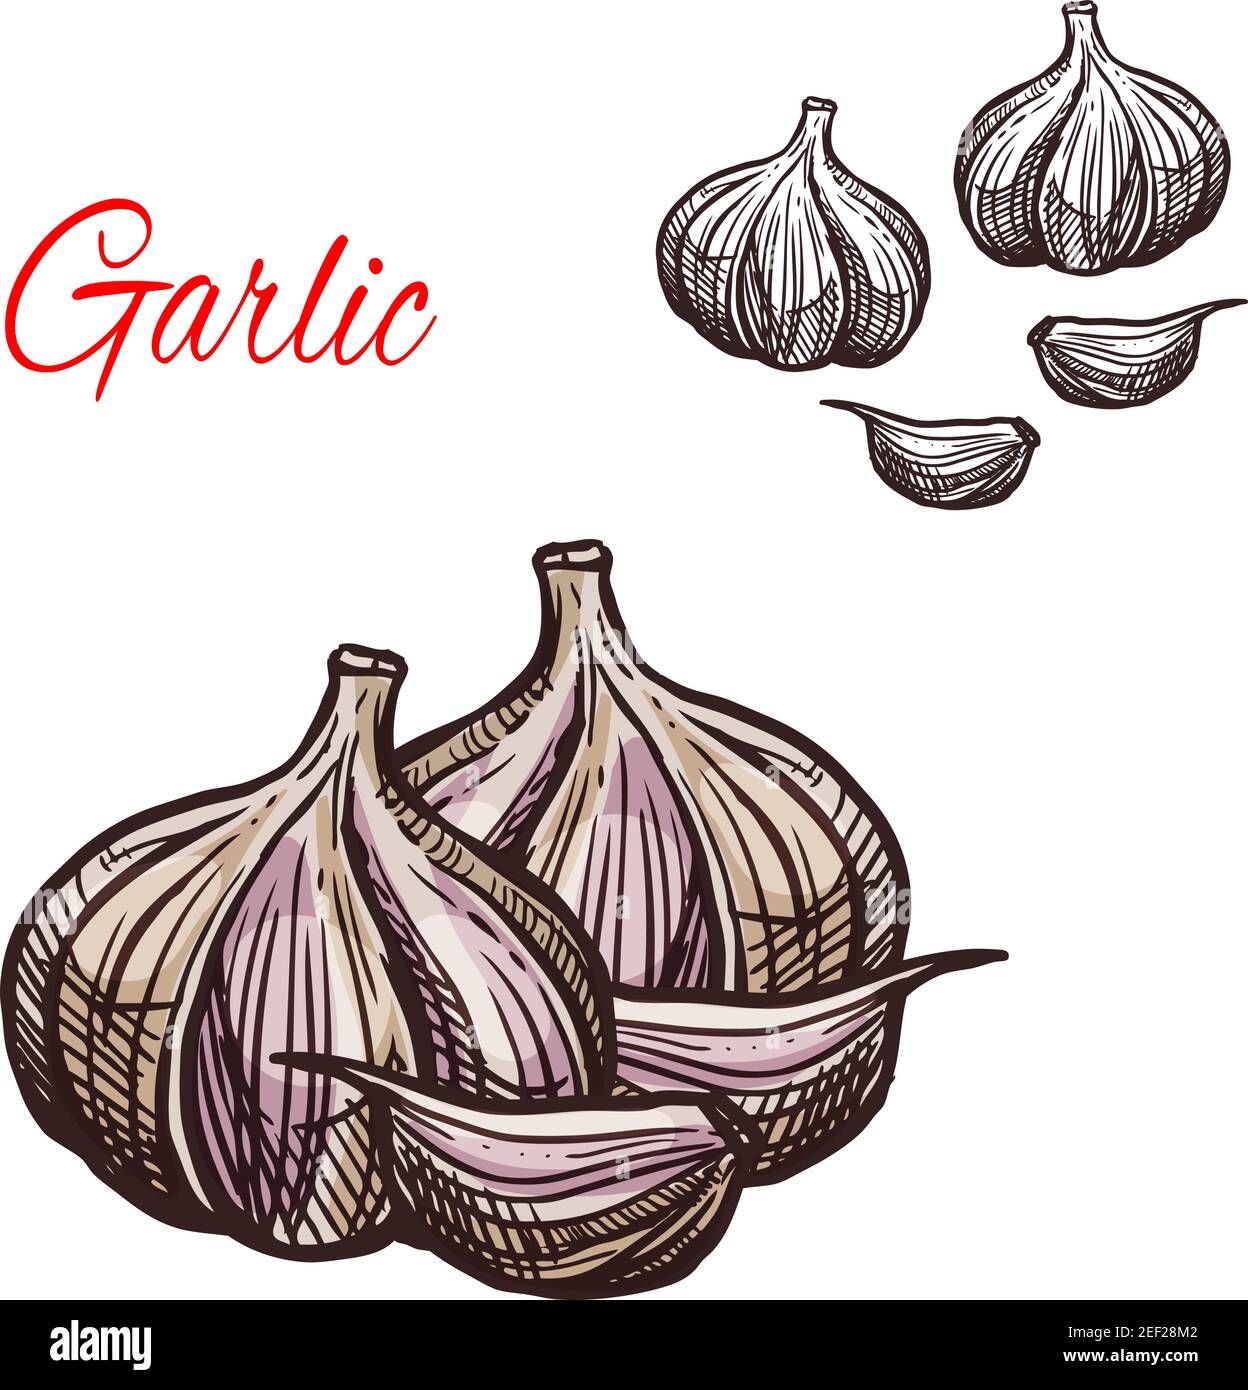 https://c8.alamy.com/comp/2EF28M2/garlic-seasoning-spice-herb-sketch-icon-vector-isolated-garlic-bulb-vegetable-plant-for-culinary-cuisine-cooking-or-flavoring-herbal-seasoning-ingred-2EF28M2.jpg